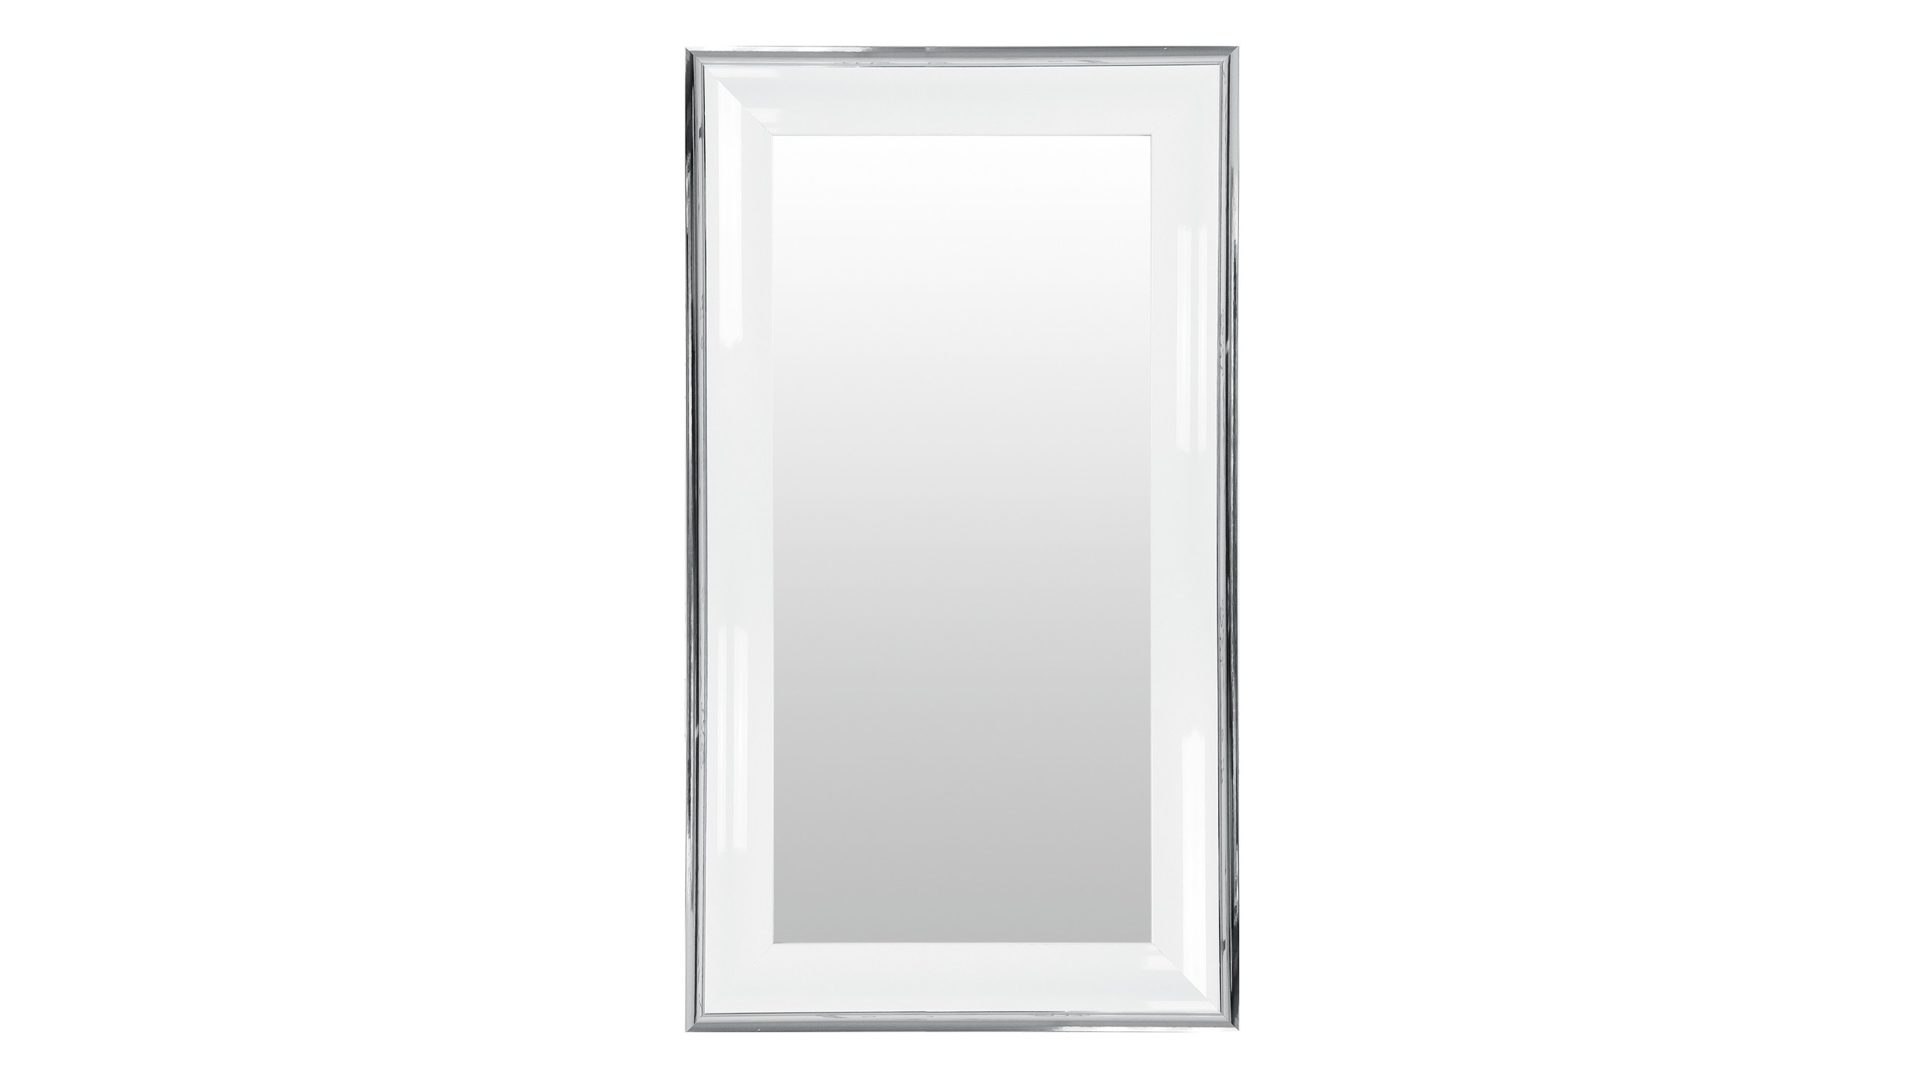 Wandspiegel Len-fra aus Kunststoff Holz MDF Spiegel in Weiß Silber LEN-FRA Wandspiegel Garderobenspiegel TIARA Holzrahmen weiss-silber - 50 x 100 cm